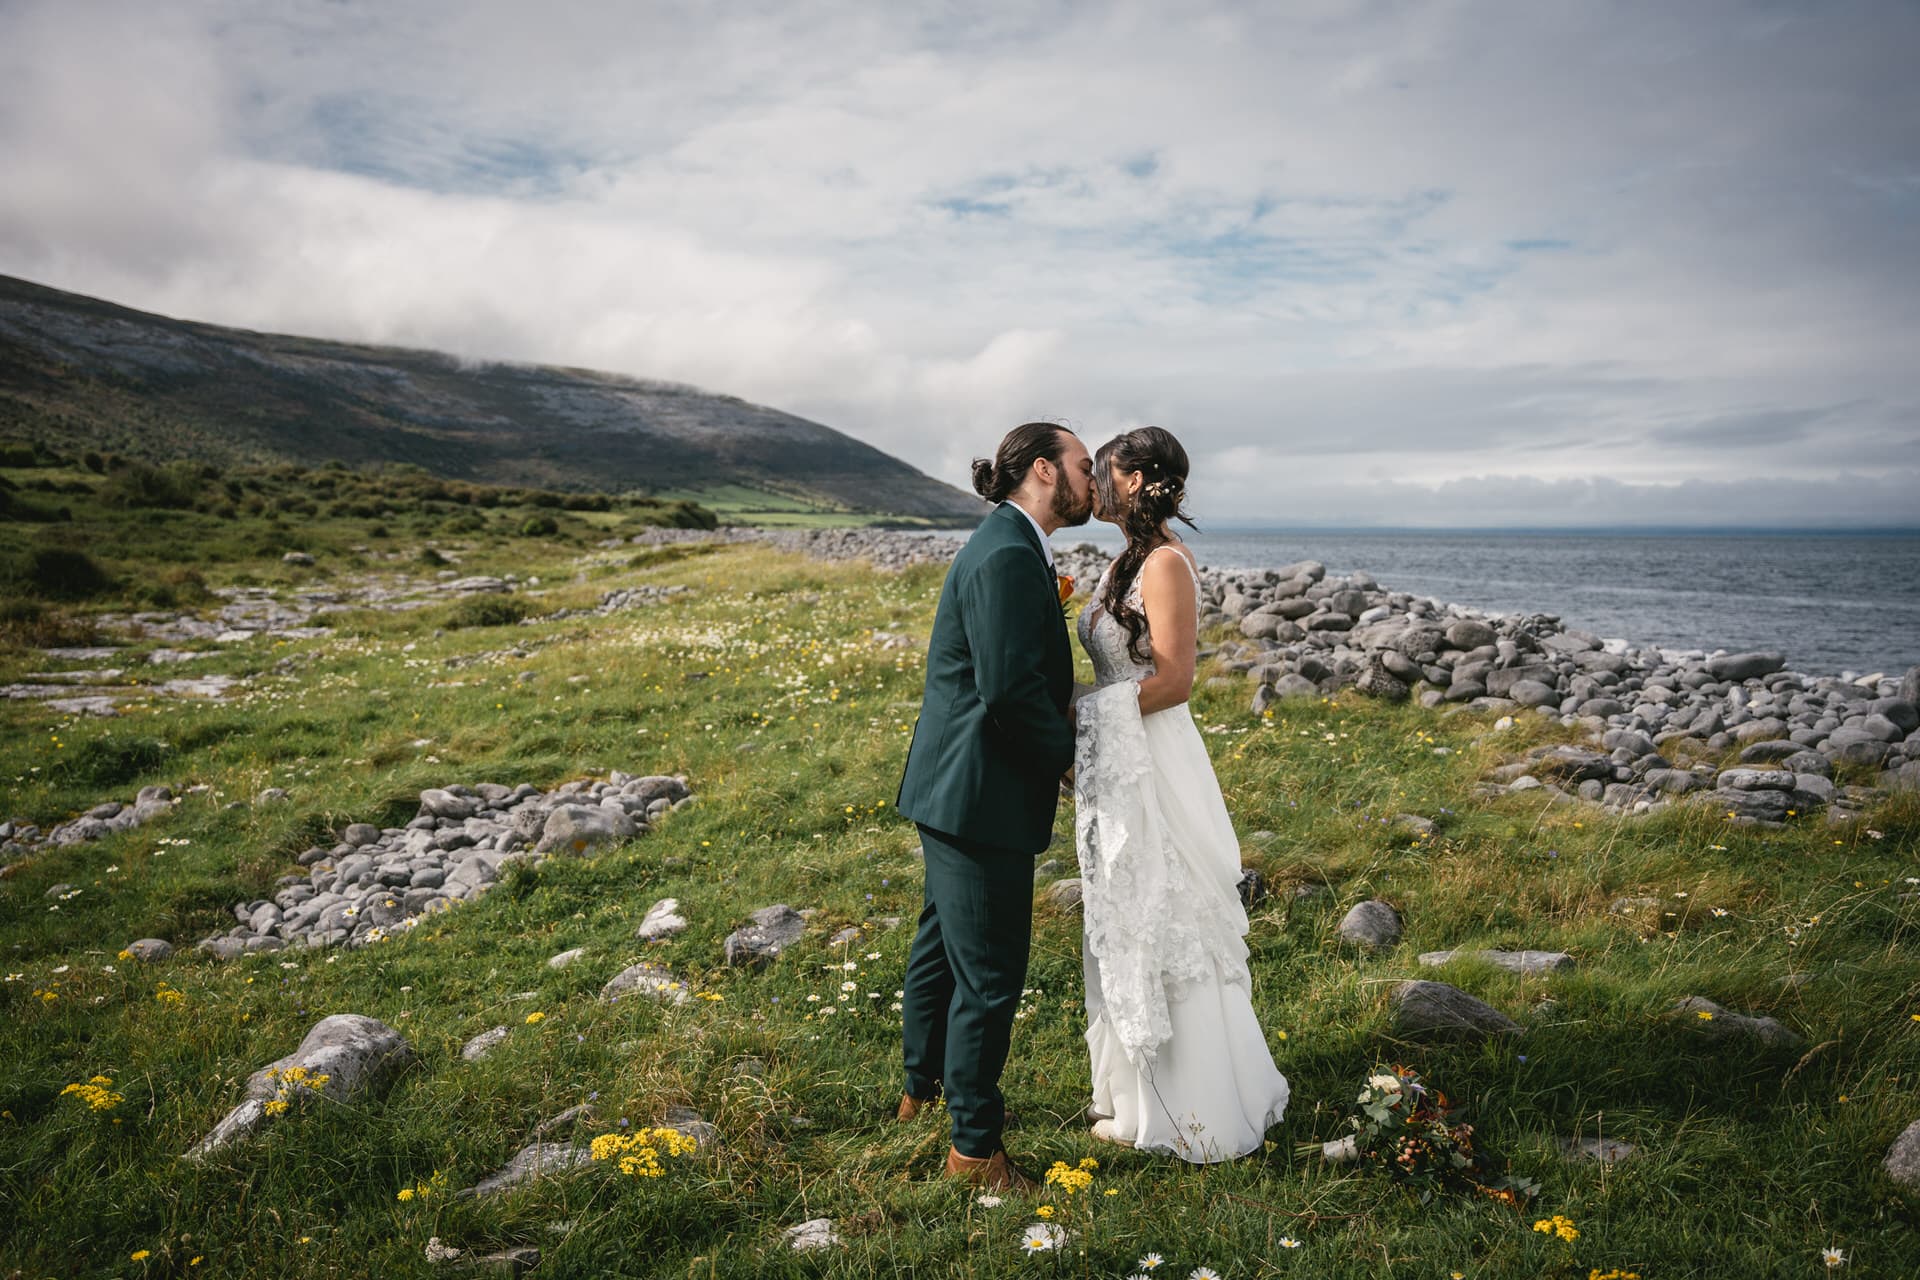 A clifftop embrace during their Irish elopement.